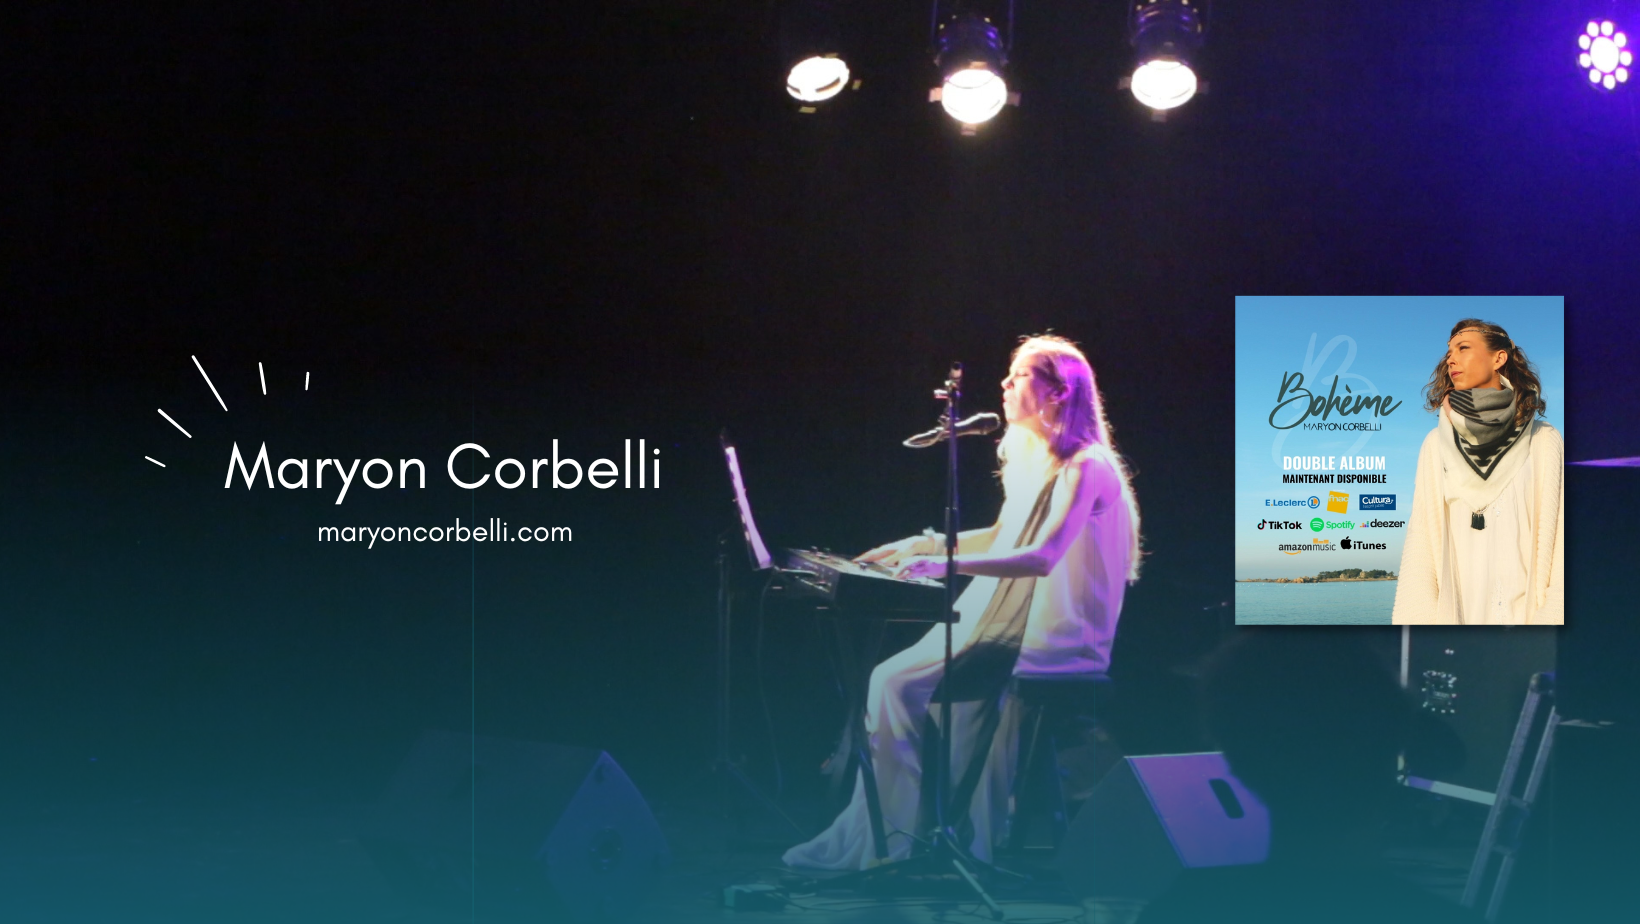 Maryon corbelli - Concert Piano voix - Le Pixie Lannion